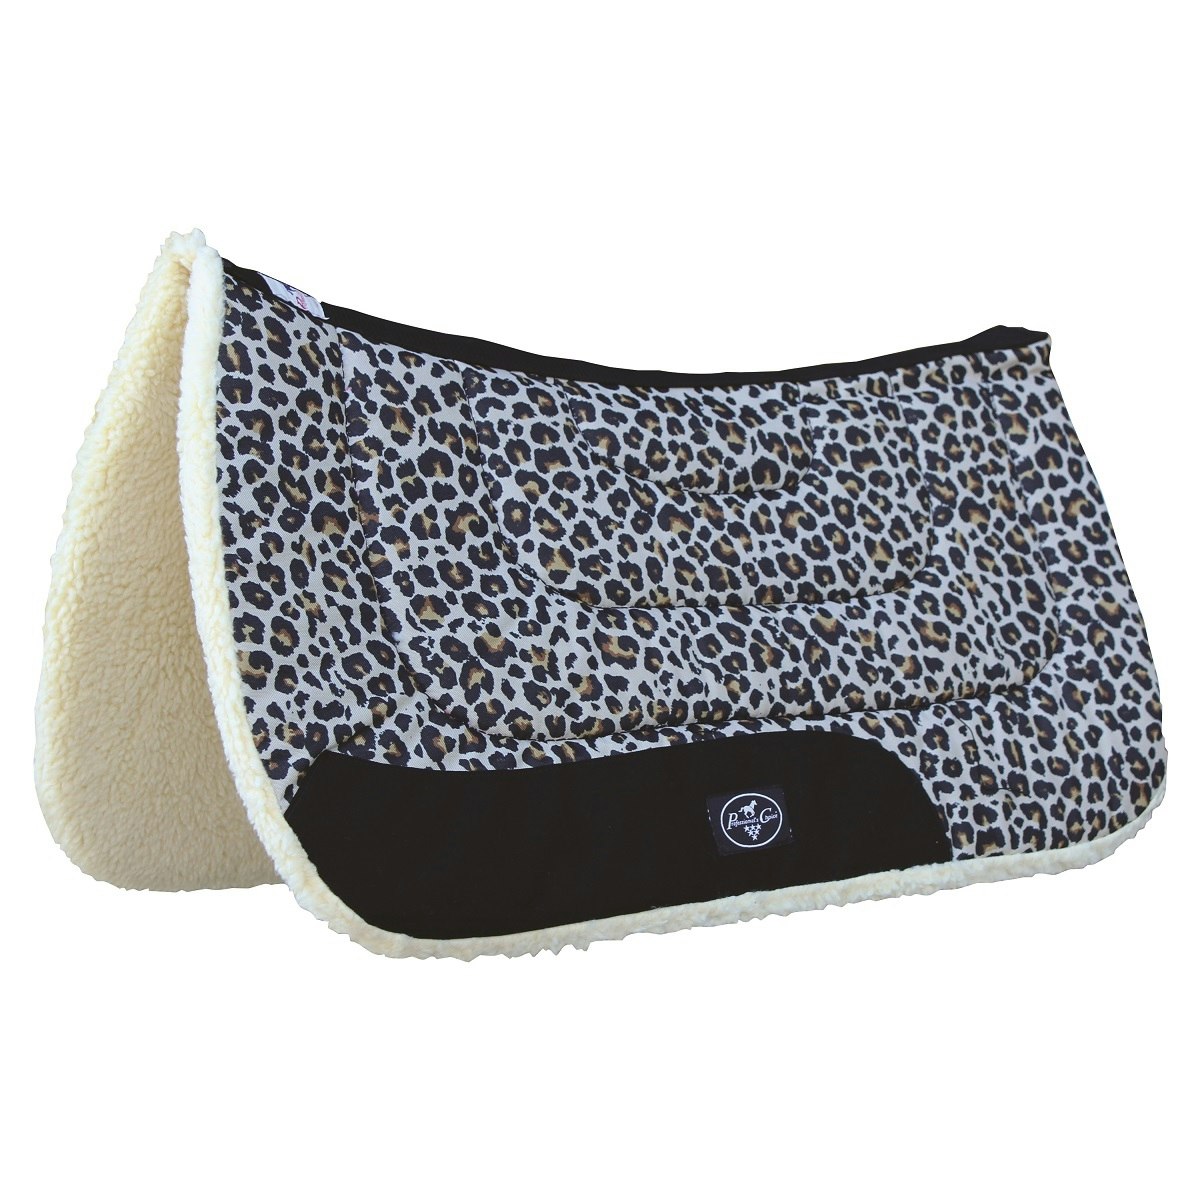 Professional´s Choice Comfort Fit Contoured Work Pad Cheetah